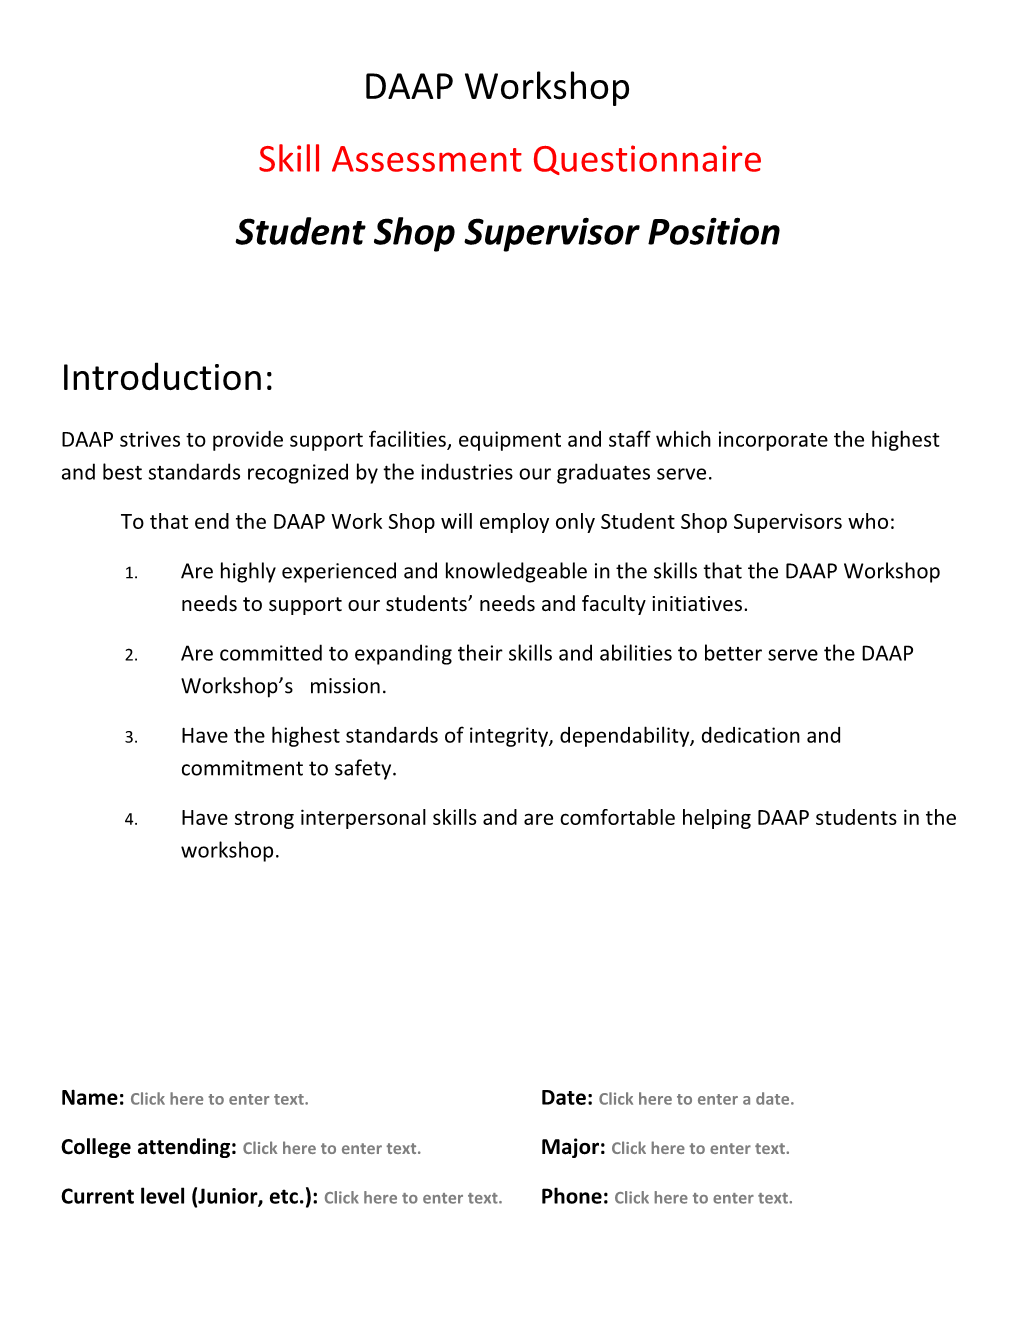 Student Shop Supervisor Position